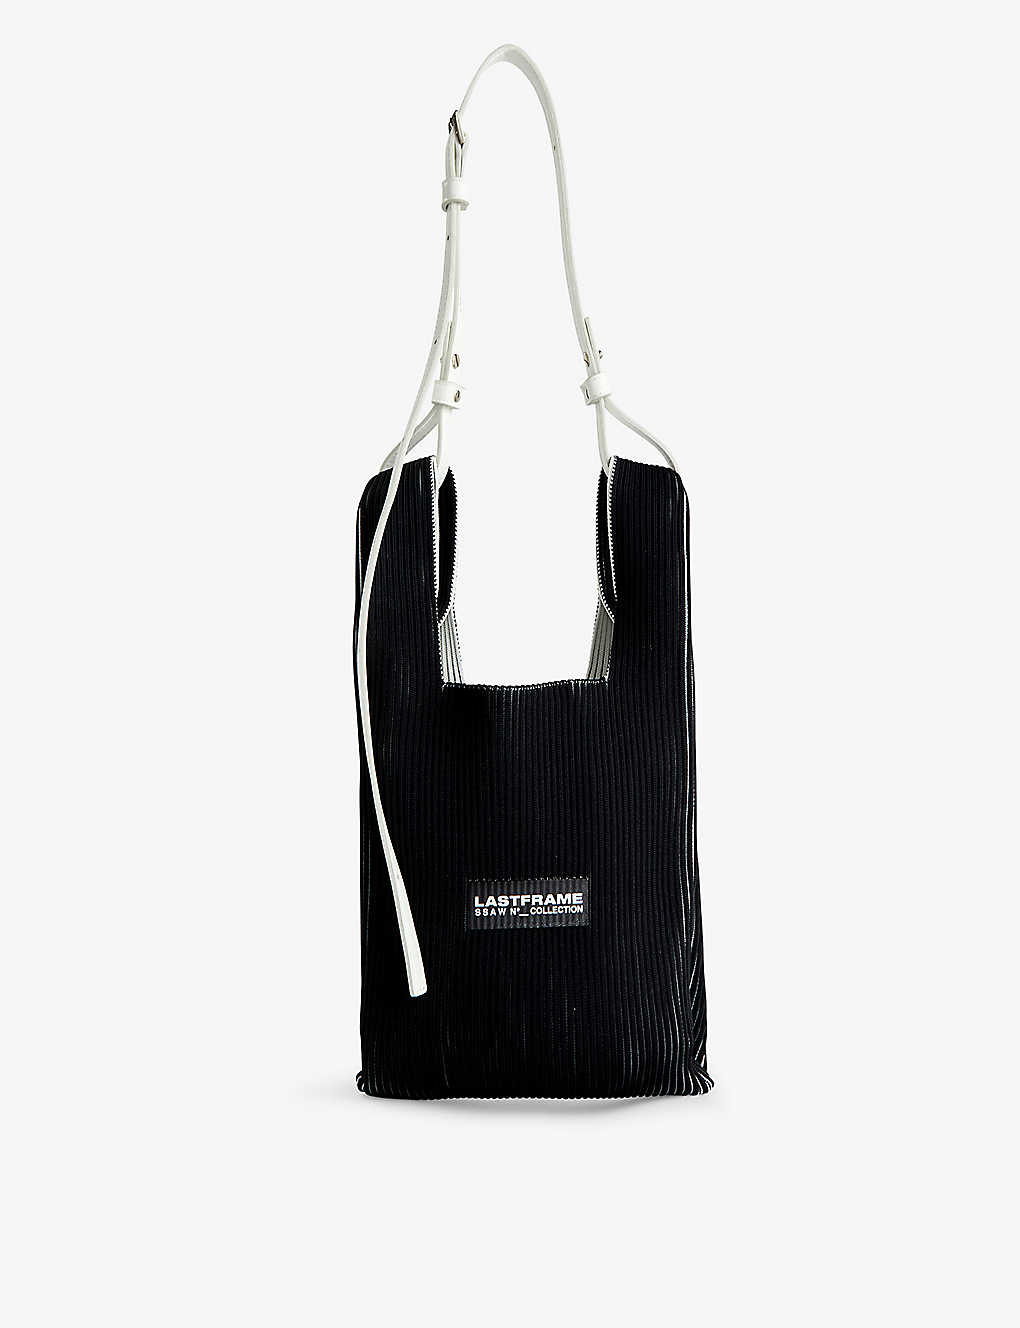 Lastframe Black X Off White Kasane Market Small Knitted Shoulder Bag